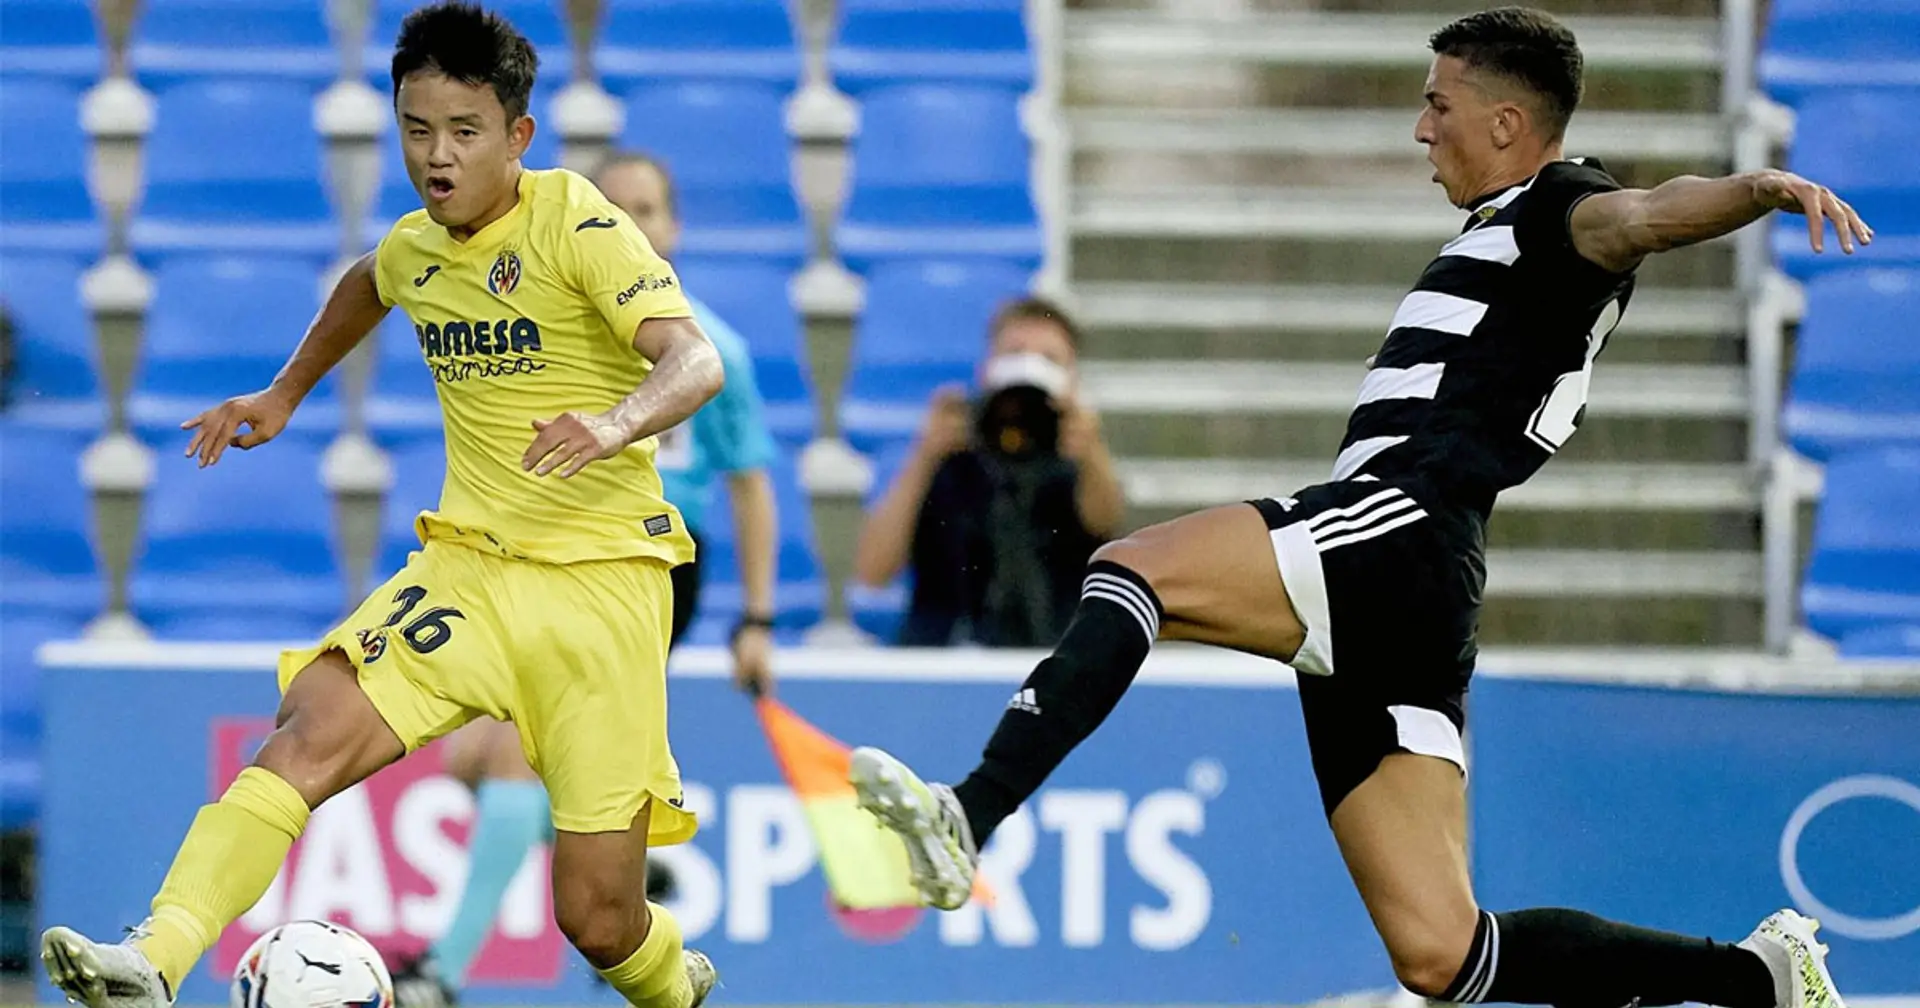 Kubo makes Villarreal debut in friendly game ahead of La Liga season